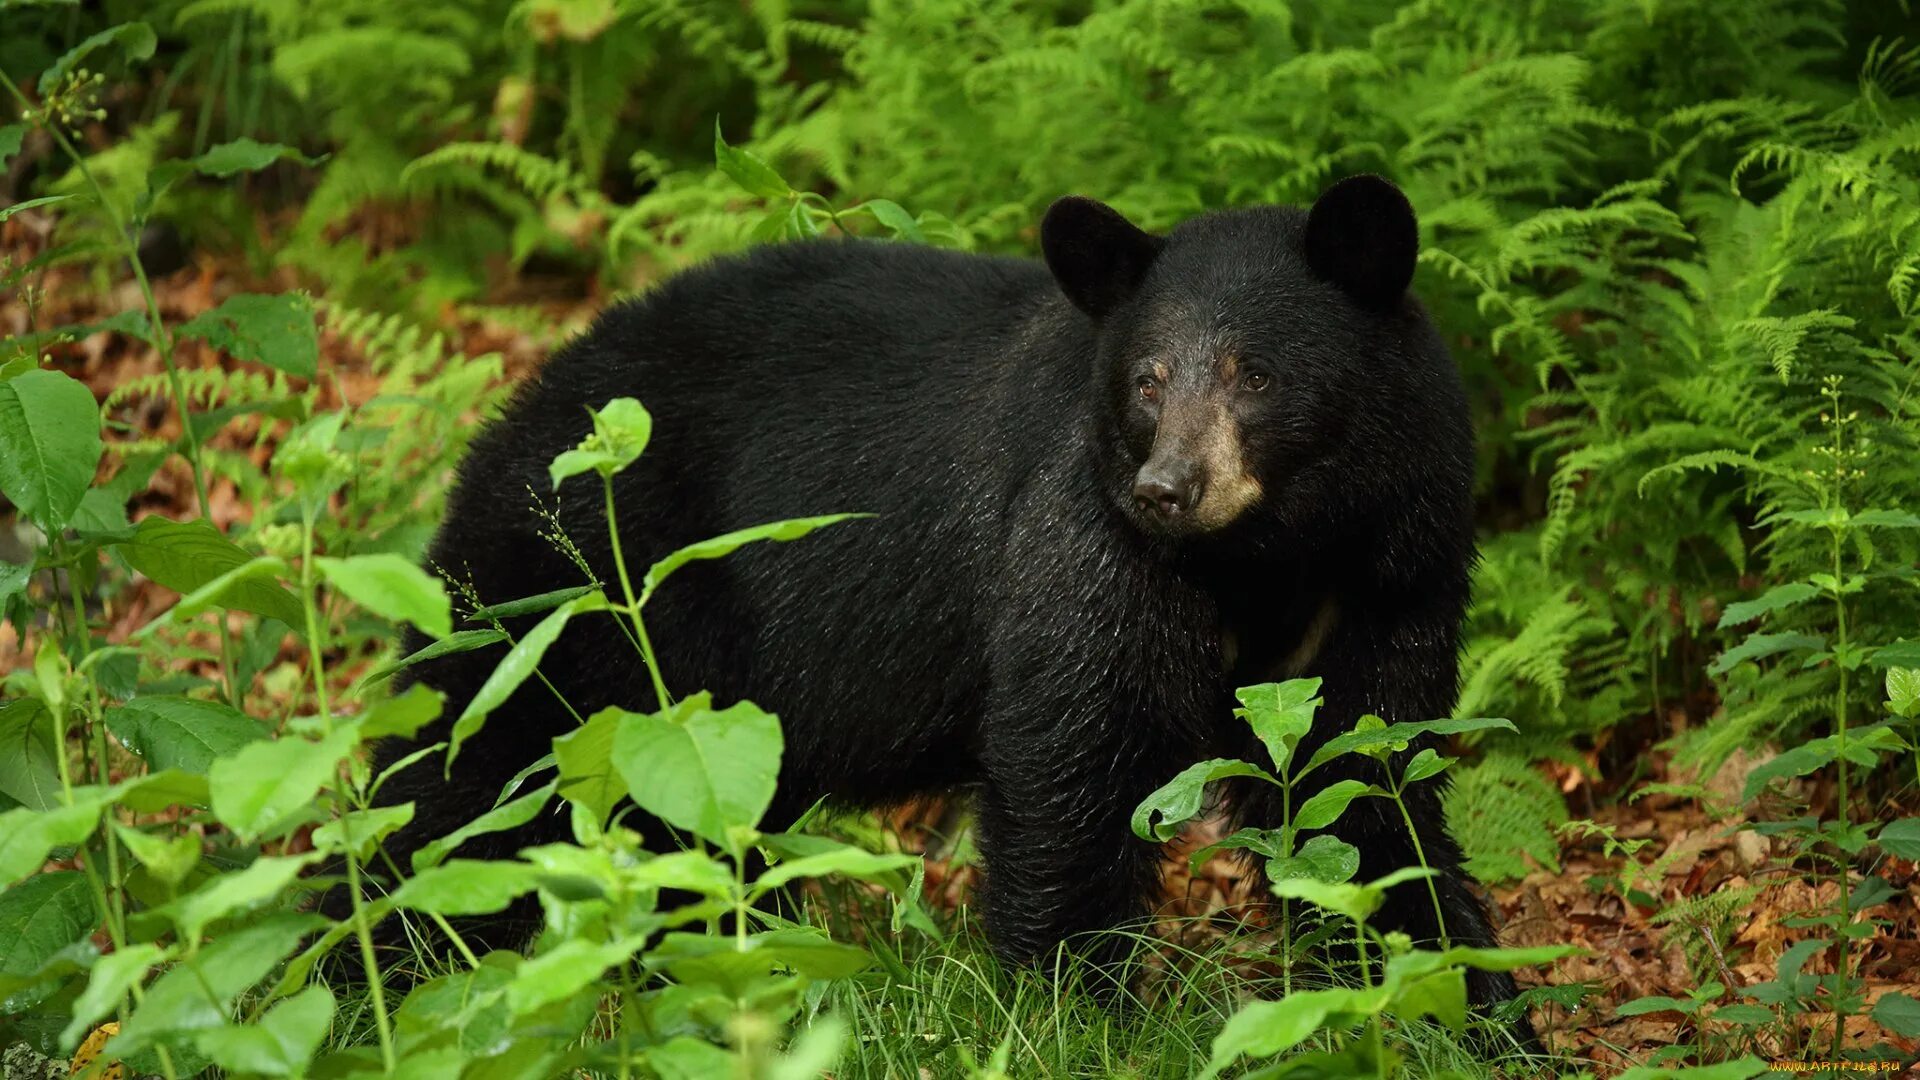 Медведь барибал умеет лазить по деревьям. Барибал медведь. Барибал тайги. Американский черный медведь Барибал. Барибал медведь Википедия.